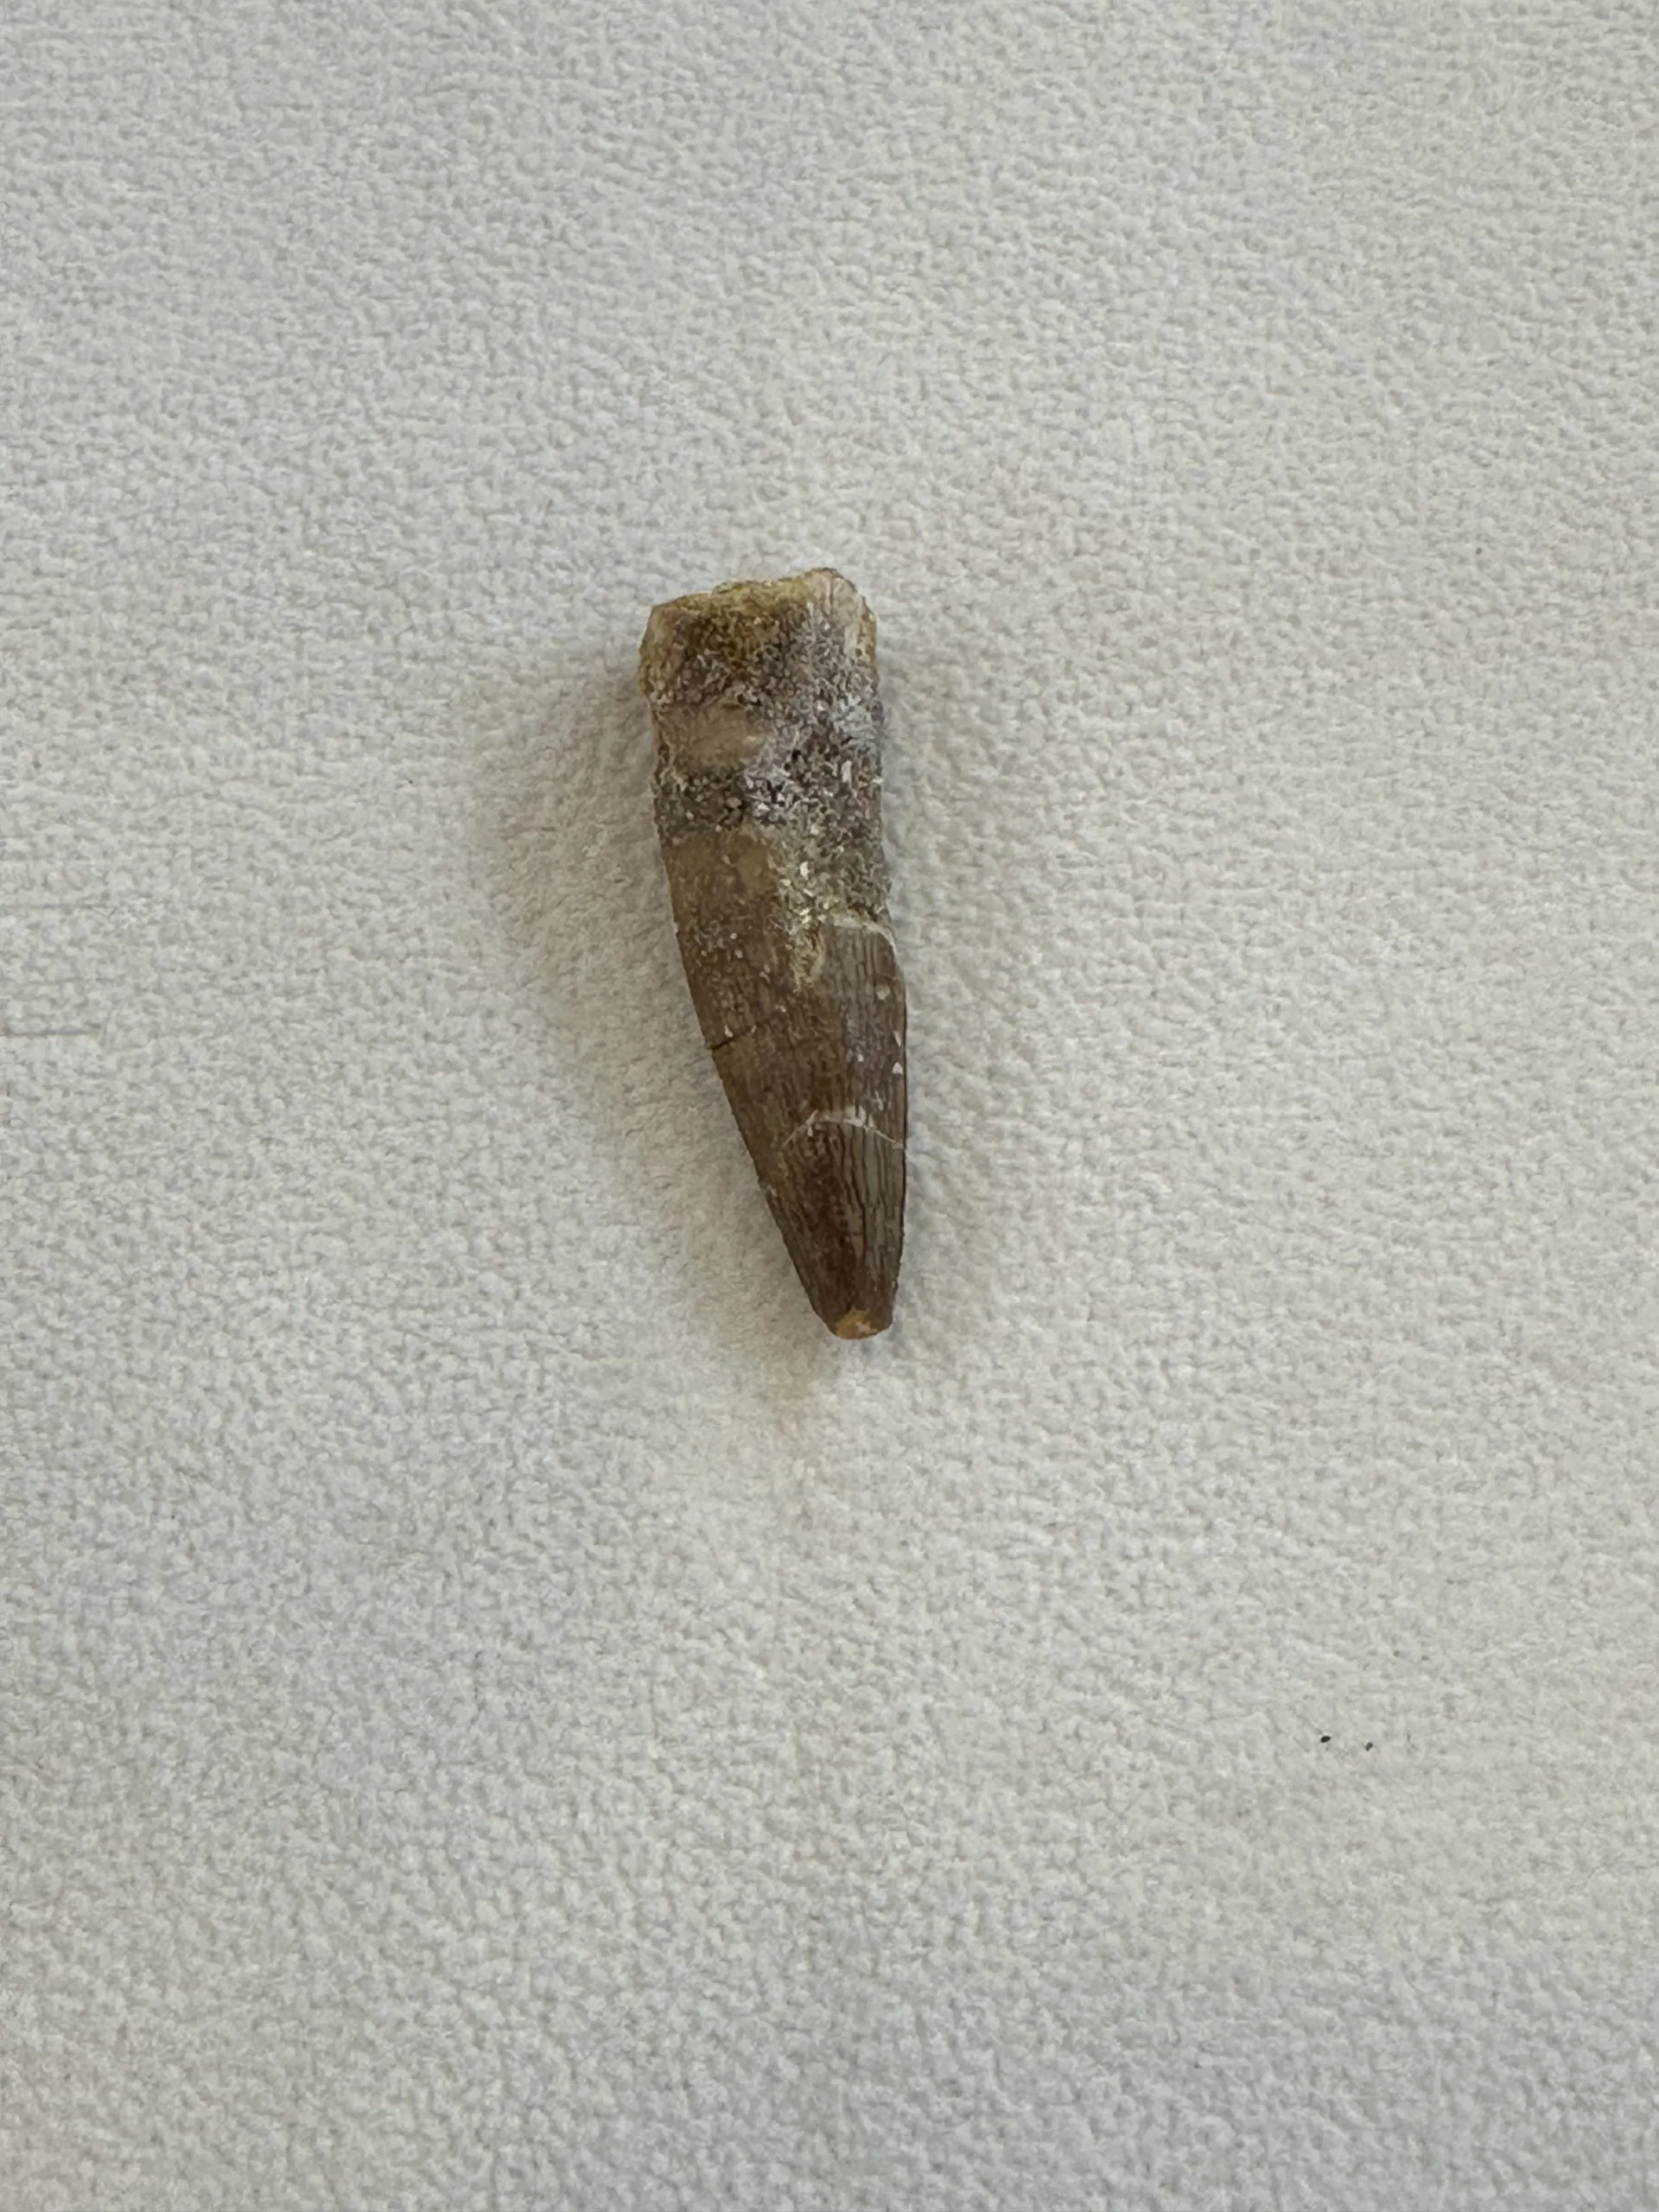 Spinosaurus Tooth,  Morocco,  beautiful 2 inch Prehistoric Online